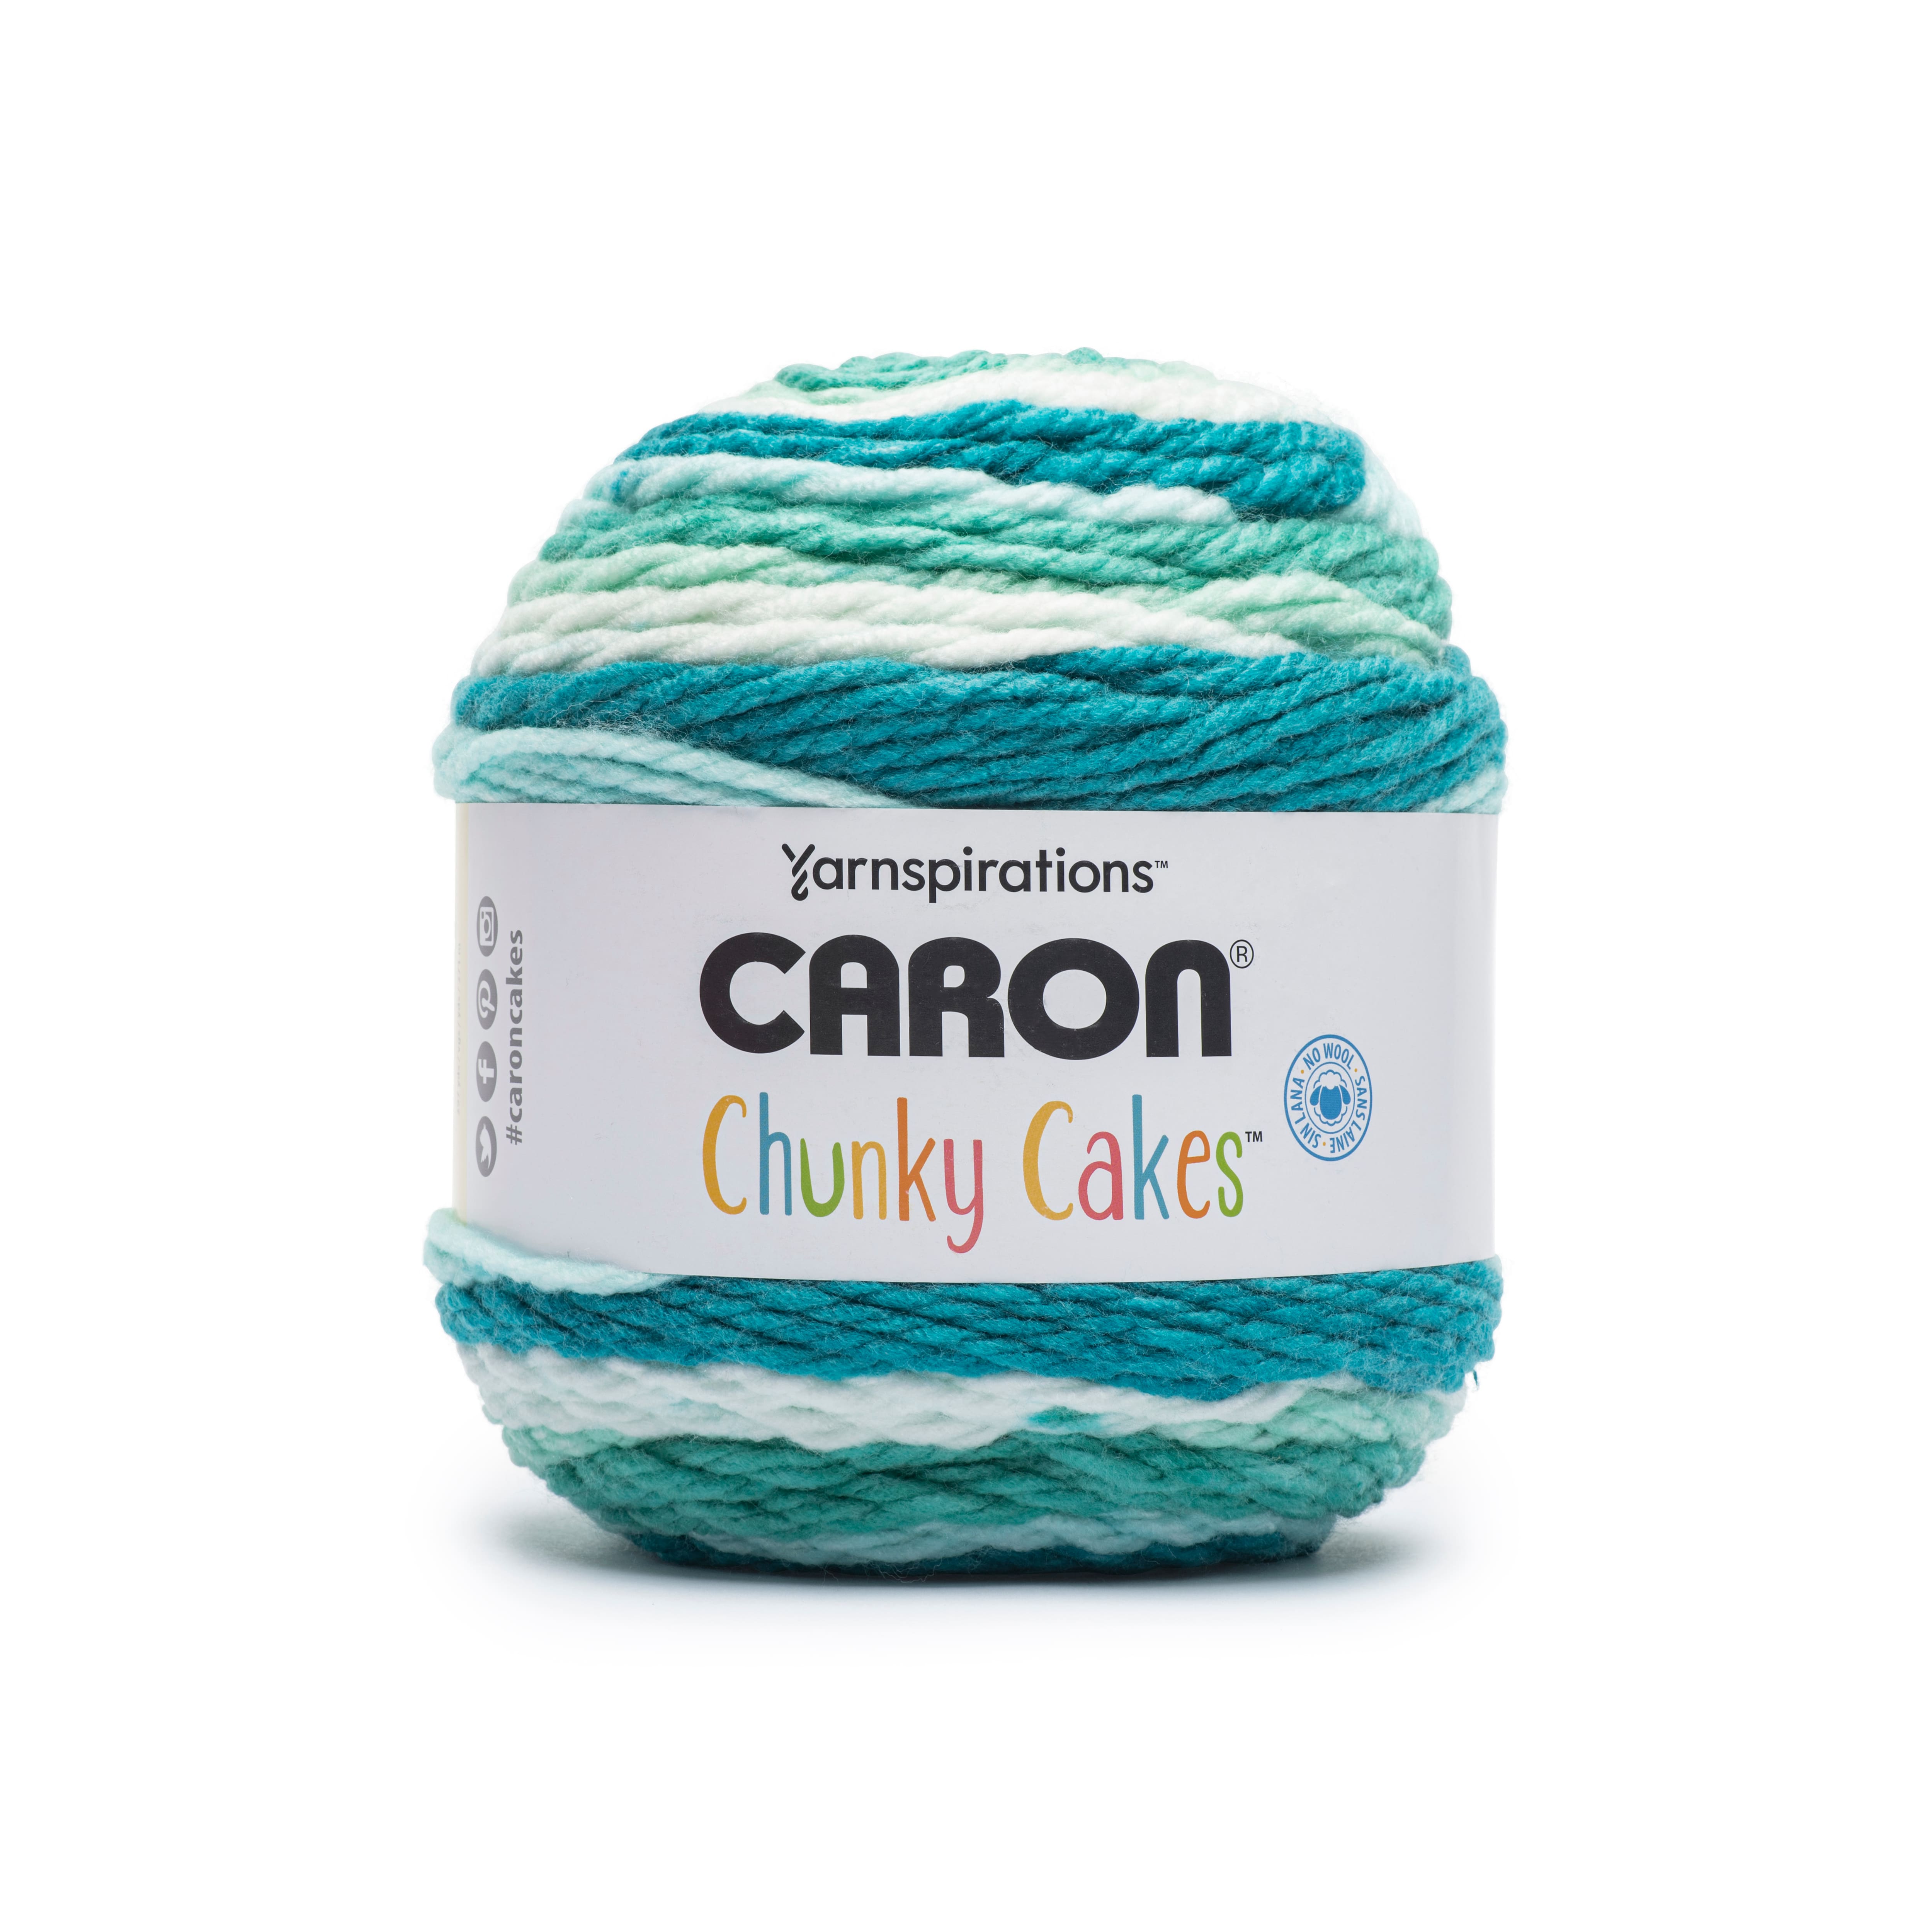 Buy Caron Chunky Cakes Self Striping Yarn 297 yd/271 m 9.8 oz/280